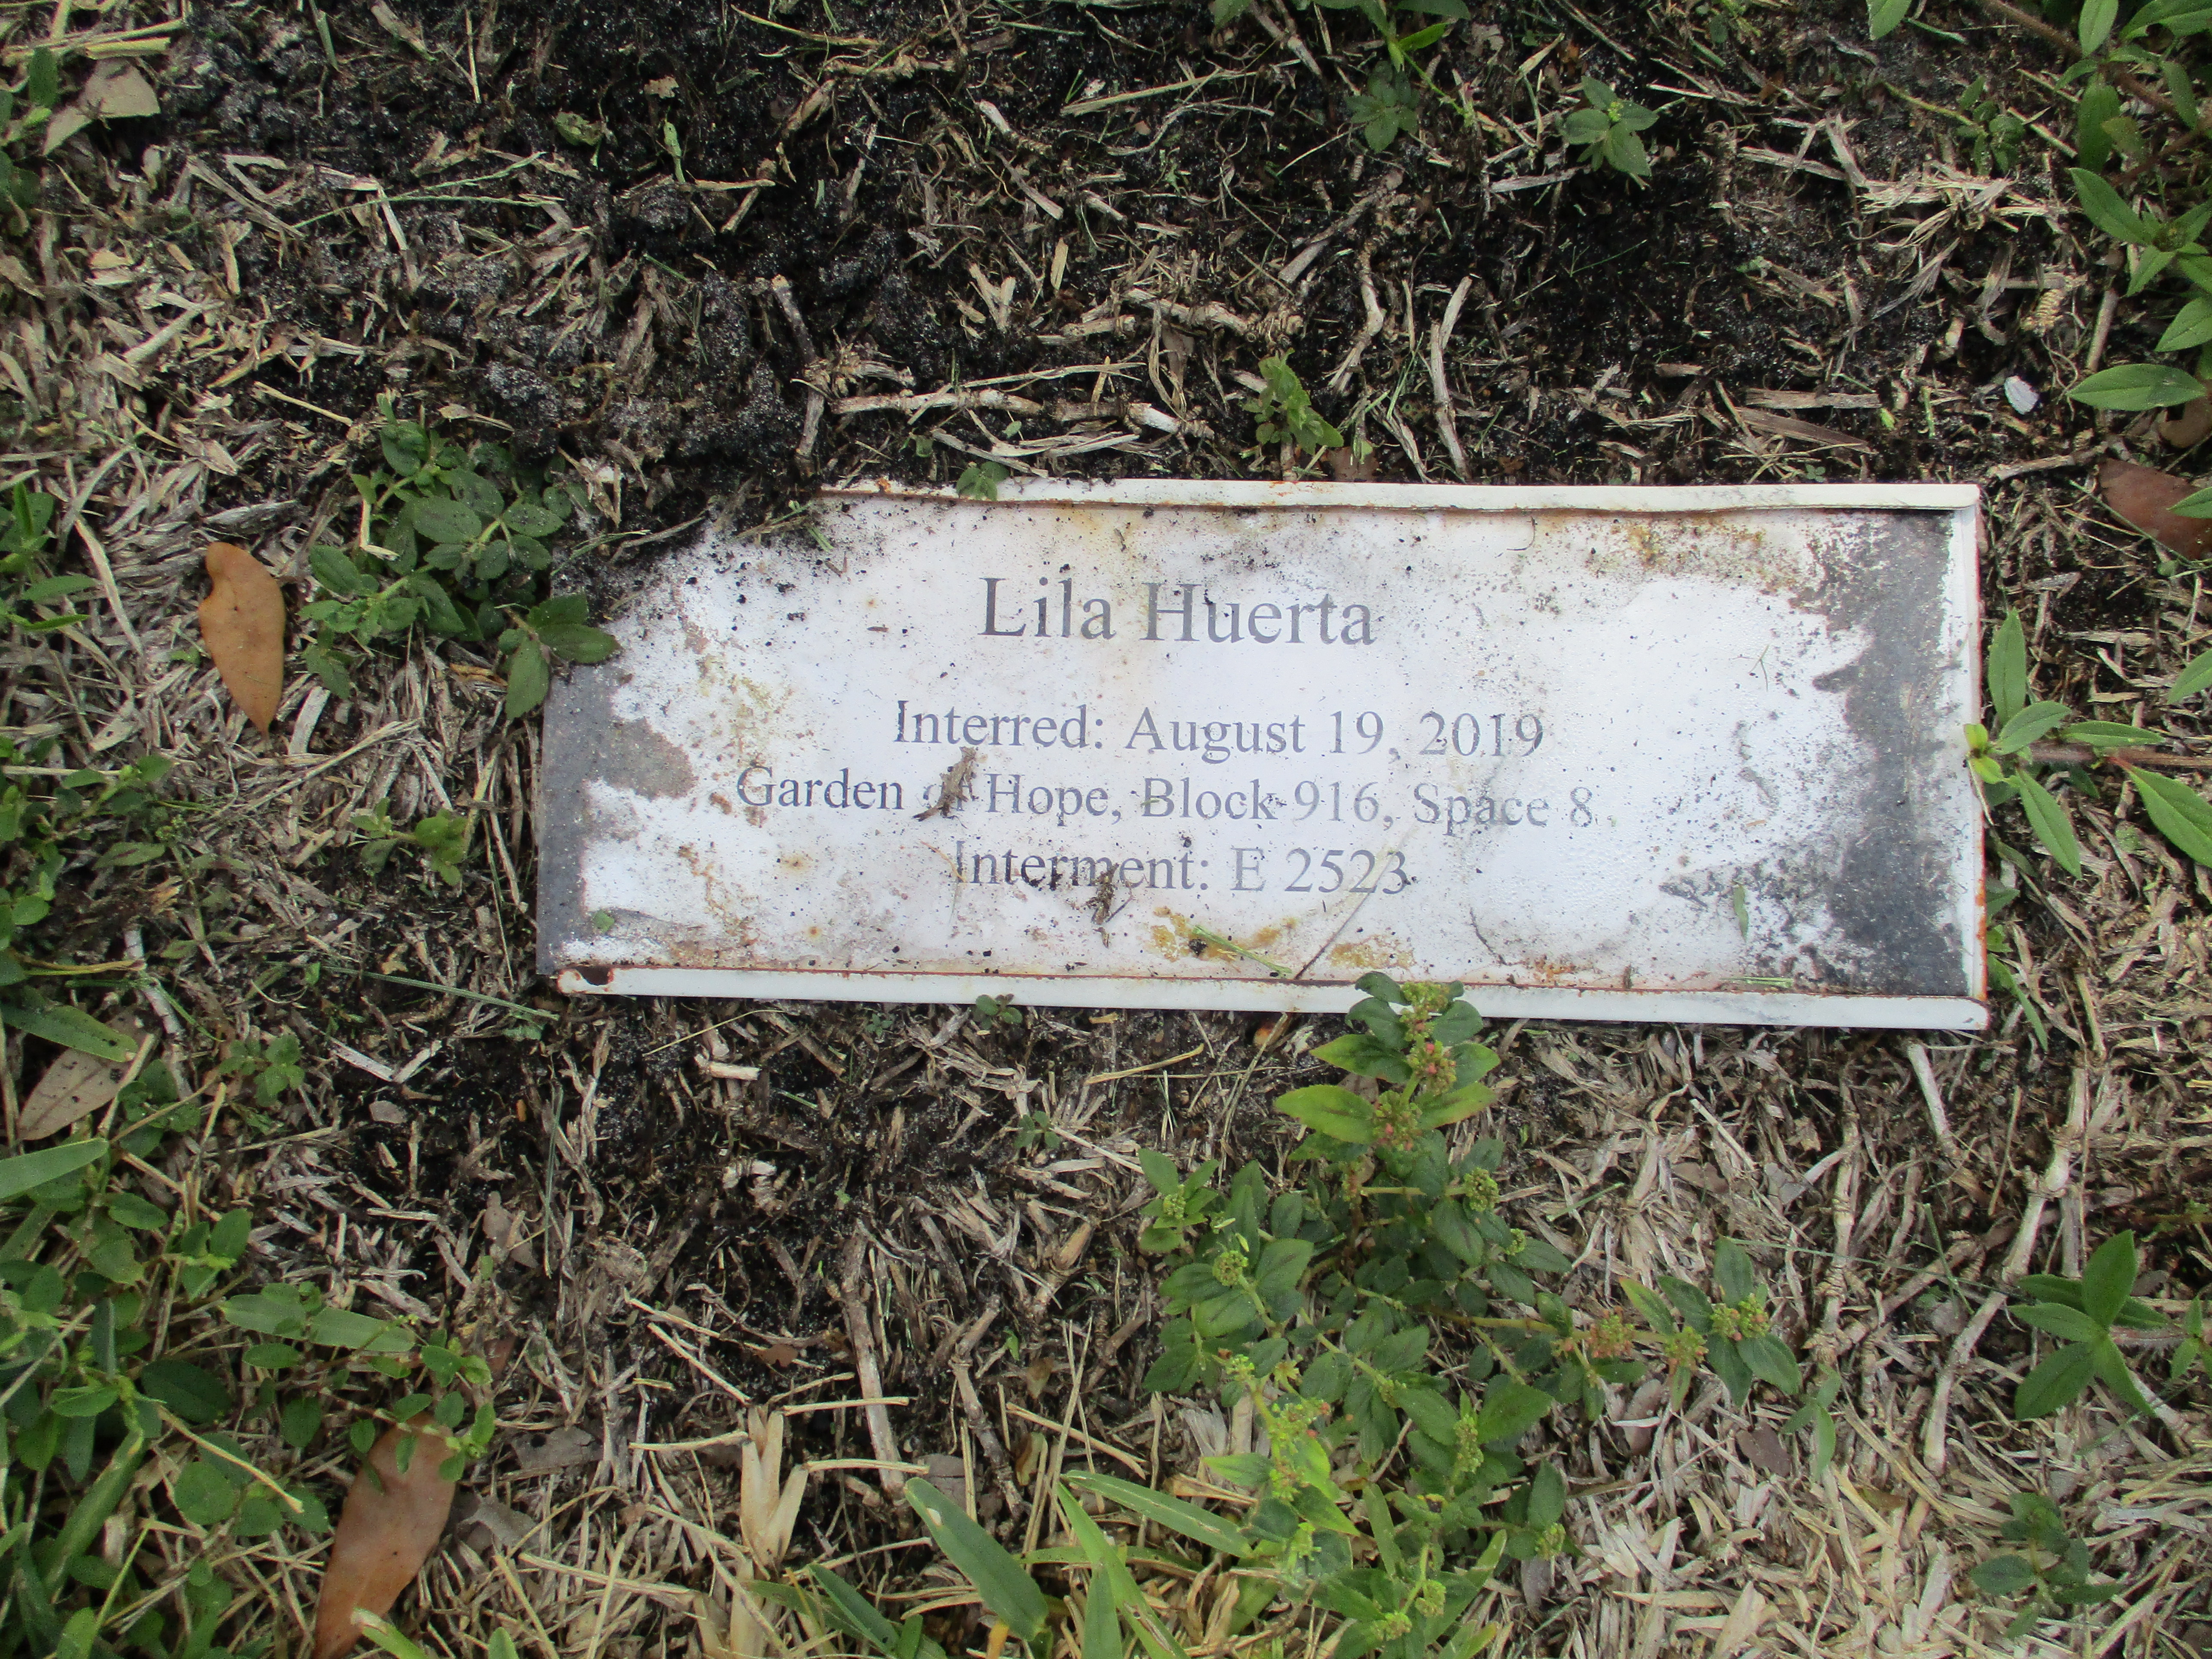 Lila Huerta